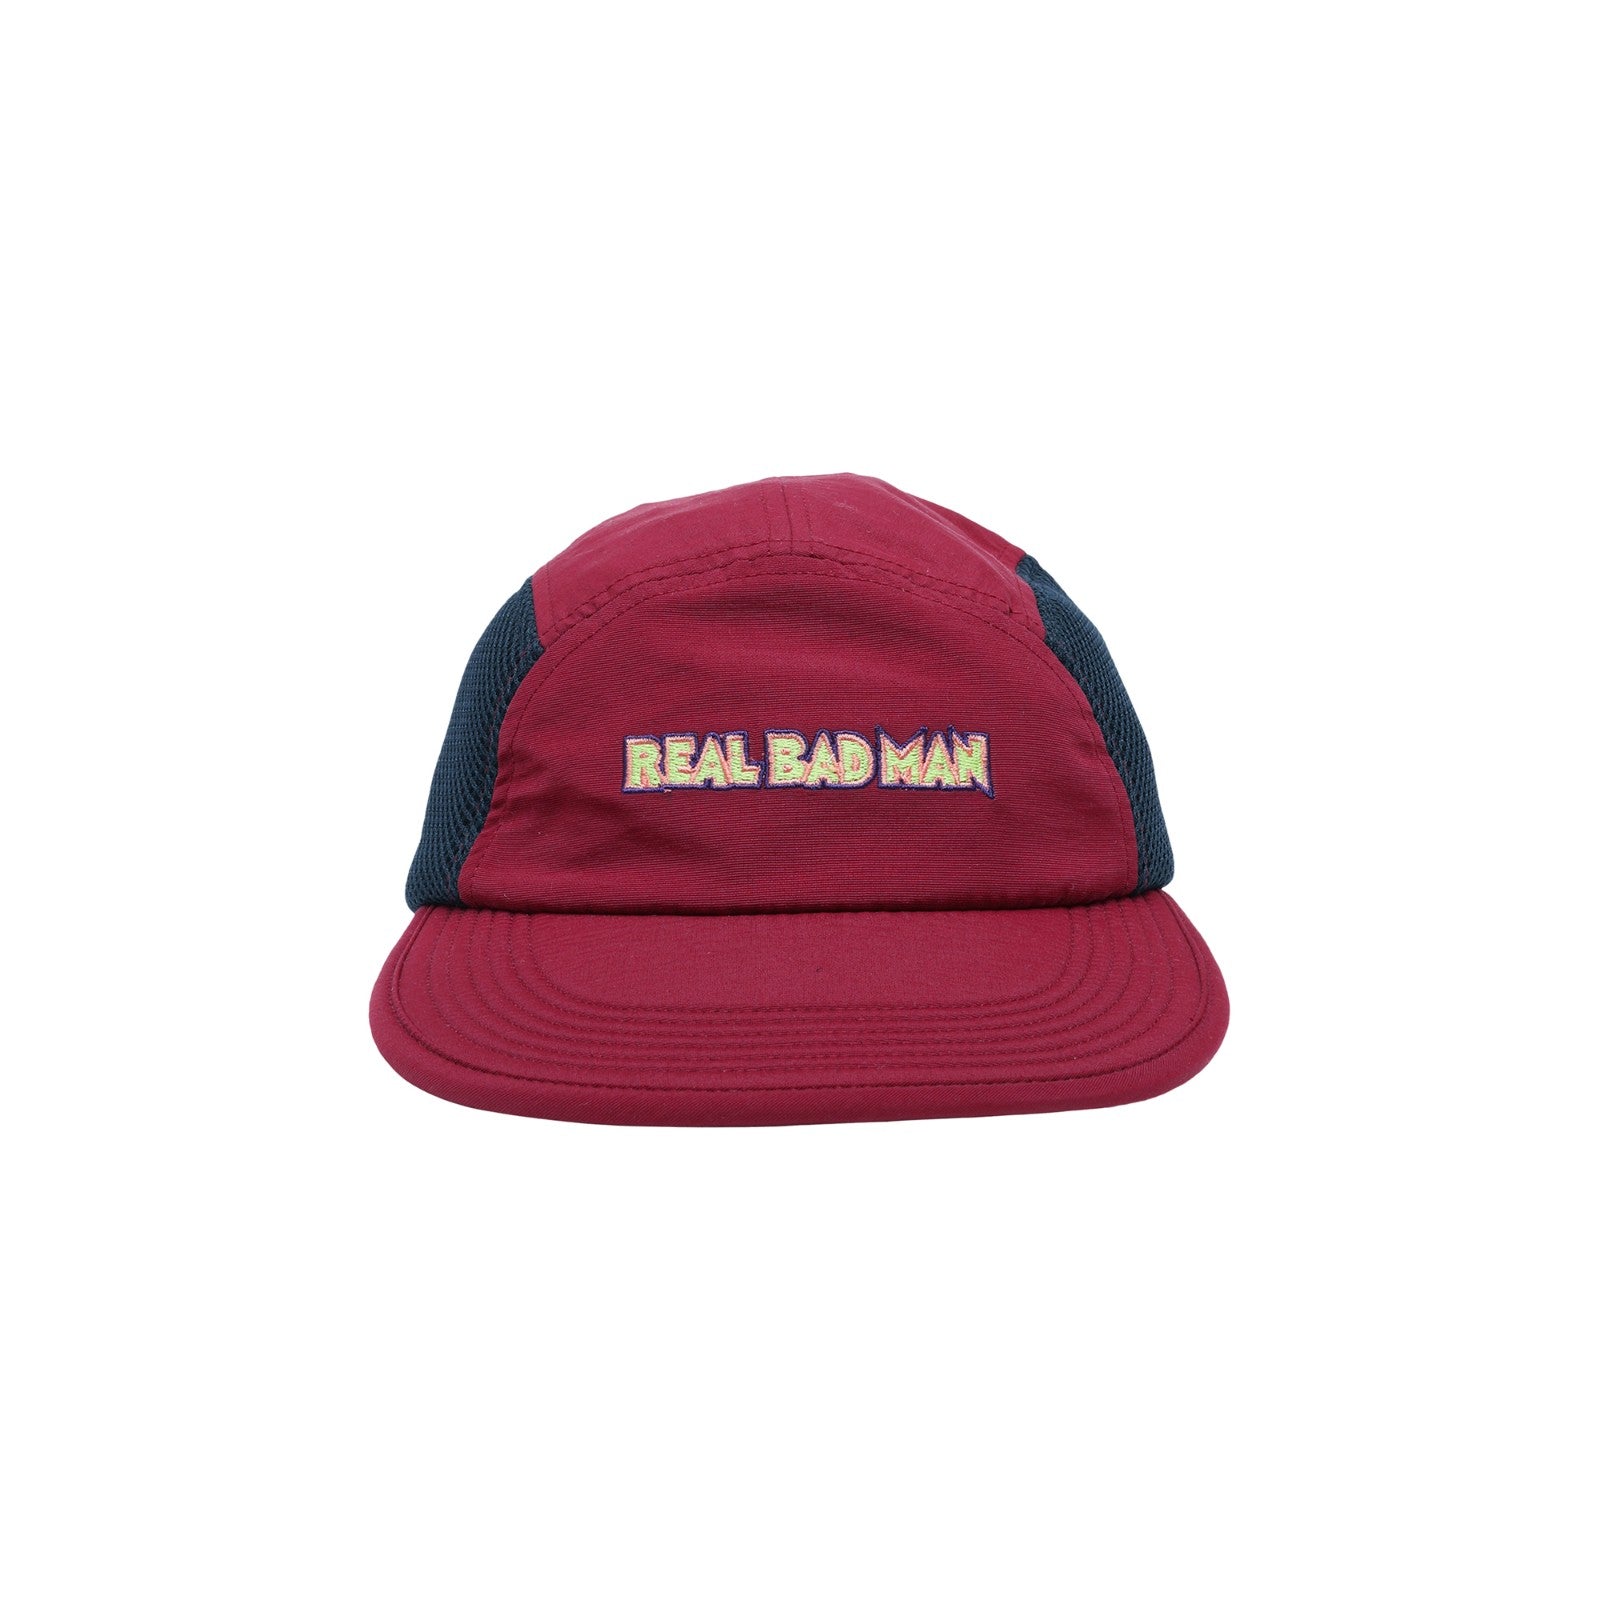 Real Bad Man MESH HIKER CAP BURGUNDY RBM12002